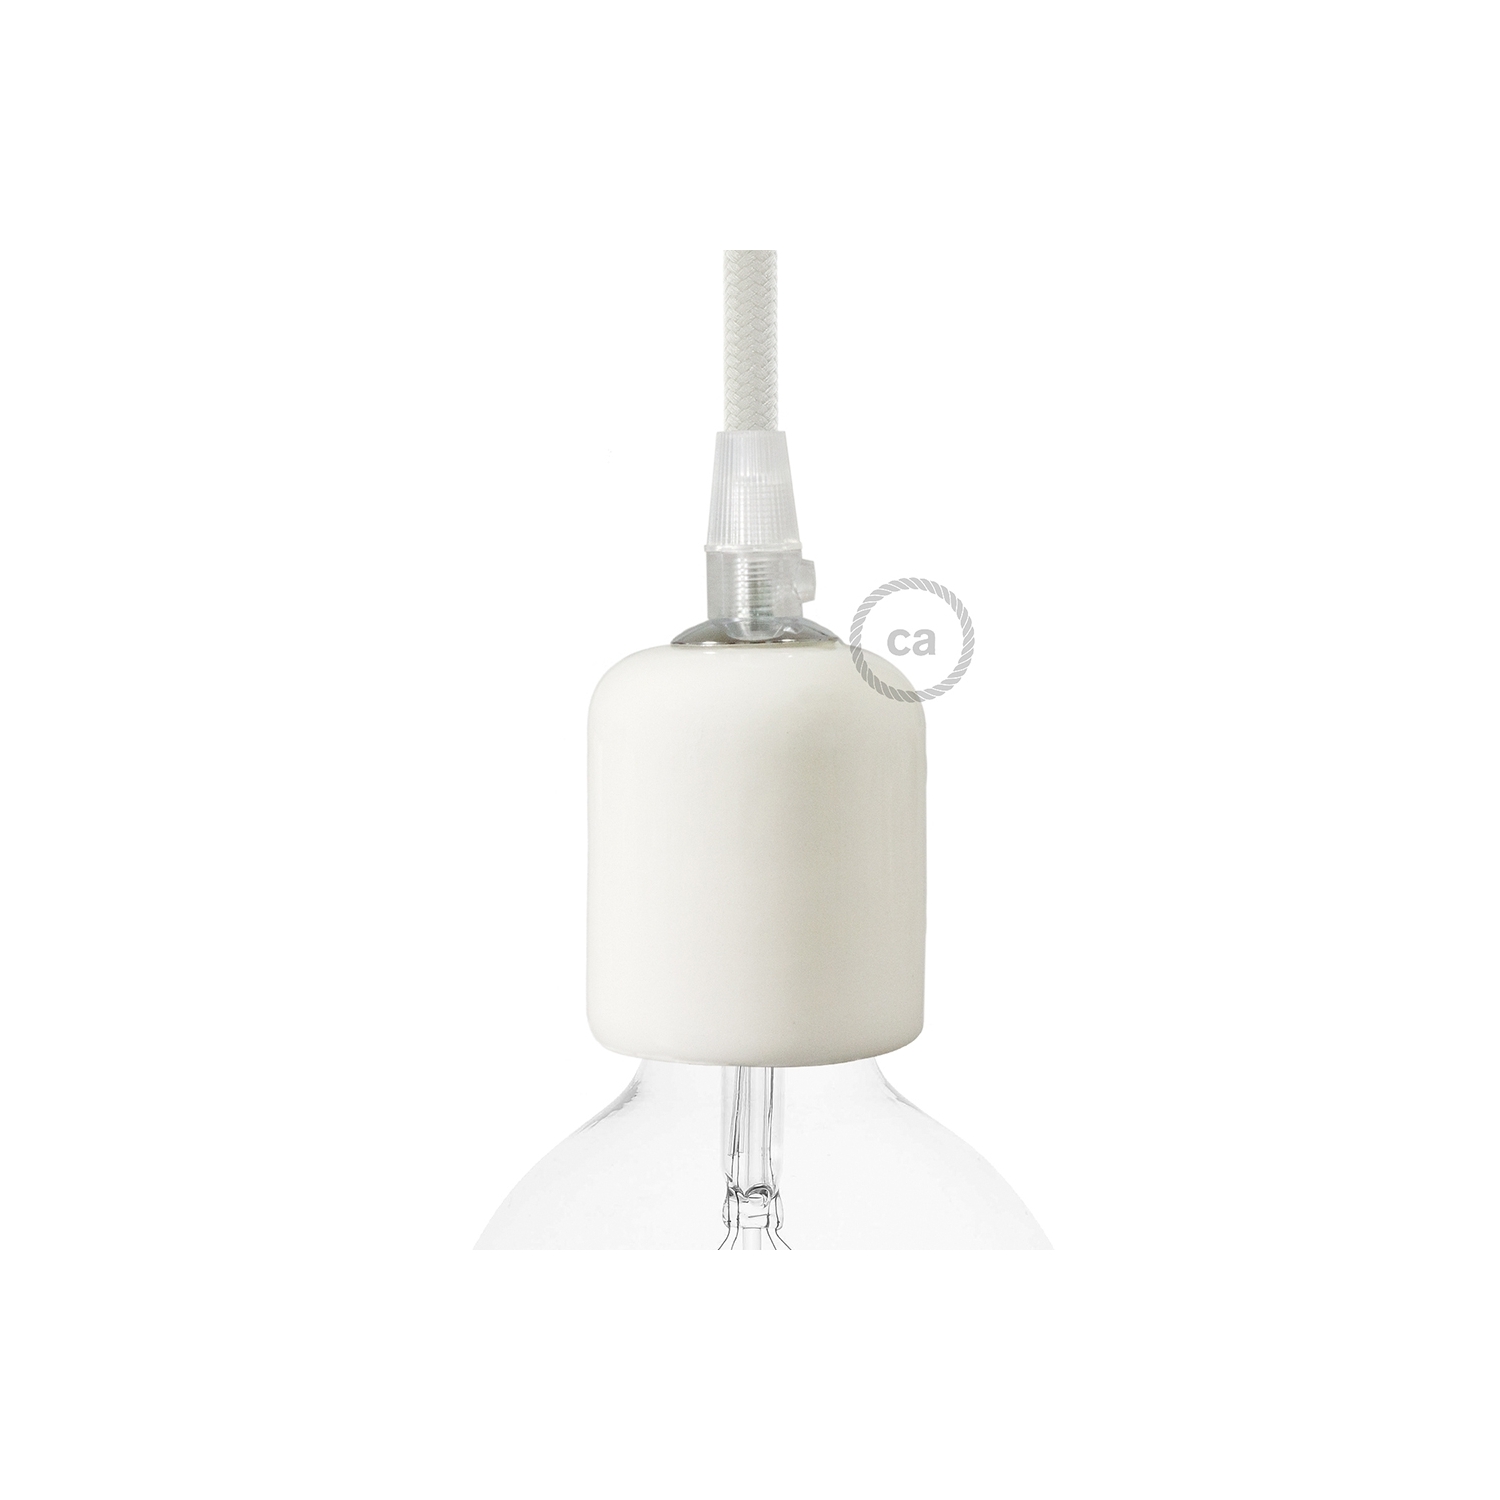 Handmade Ceramic light bulb socket kits - E26